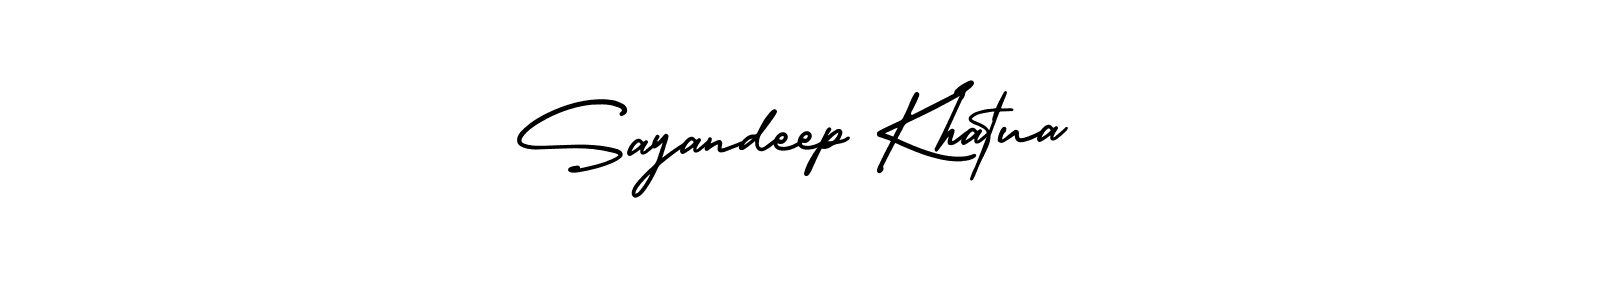 How to Draw Sayandeep Khatua signature style? AmerikaSignatureDemo-Regular is a latest design signature styles for name Sayandeep Khatua. Sayandeep Khatua signature style 3 images and pictures png